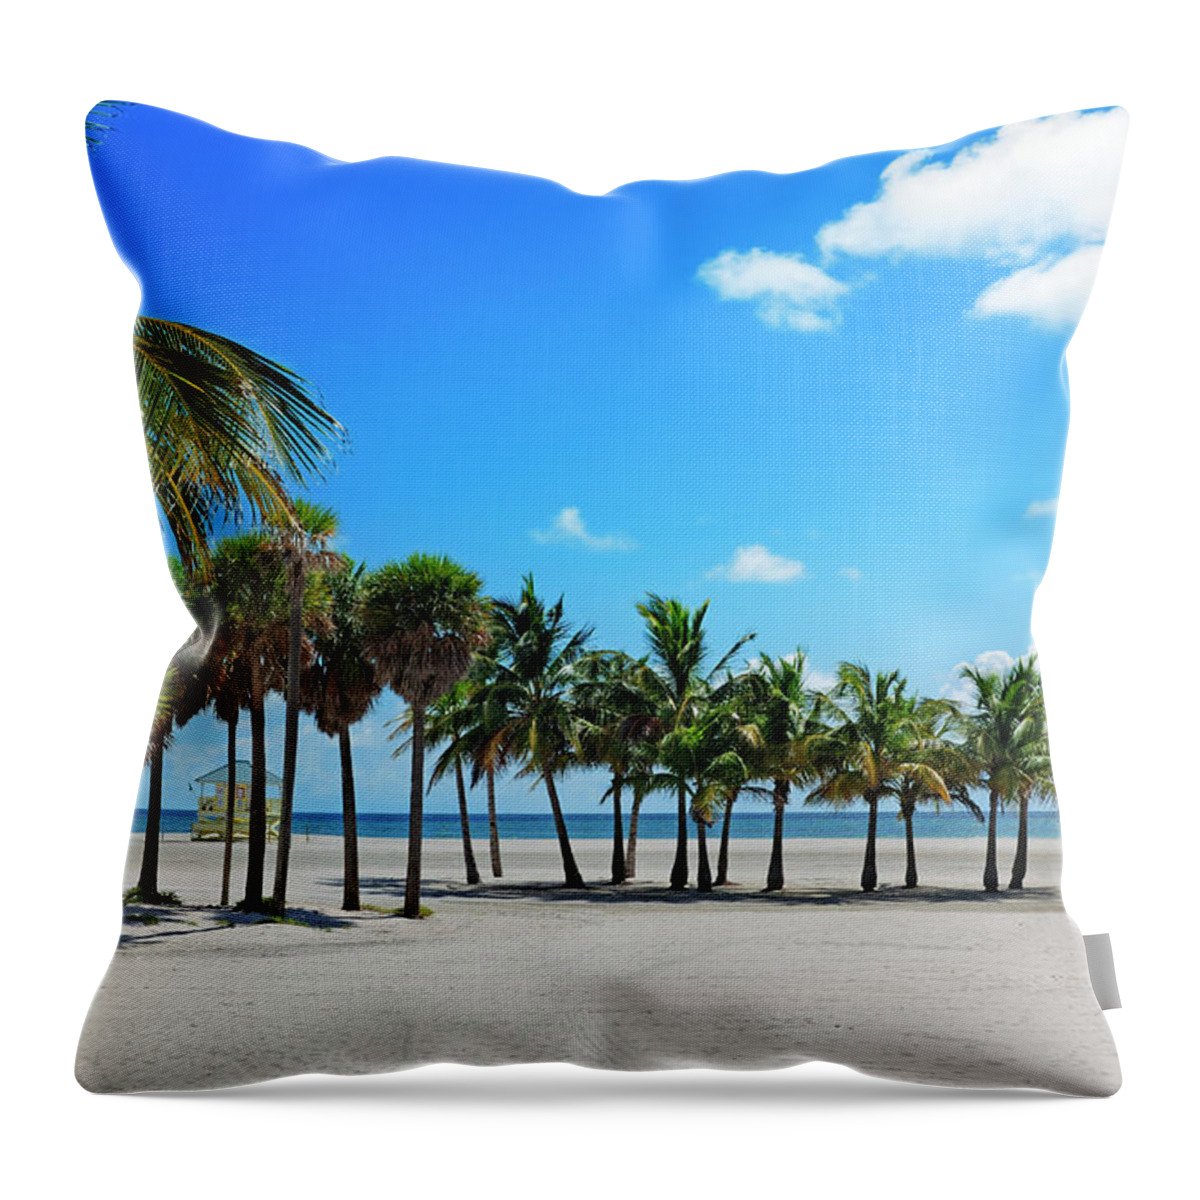 Crandon Park Throw Pillow featuring the photograph Miami Beach Tropical Paradise by Jfmdesign